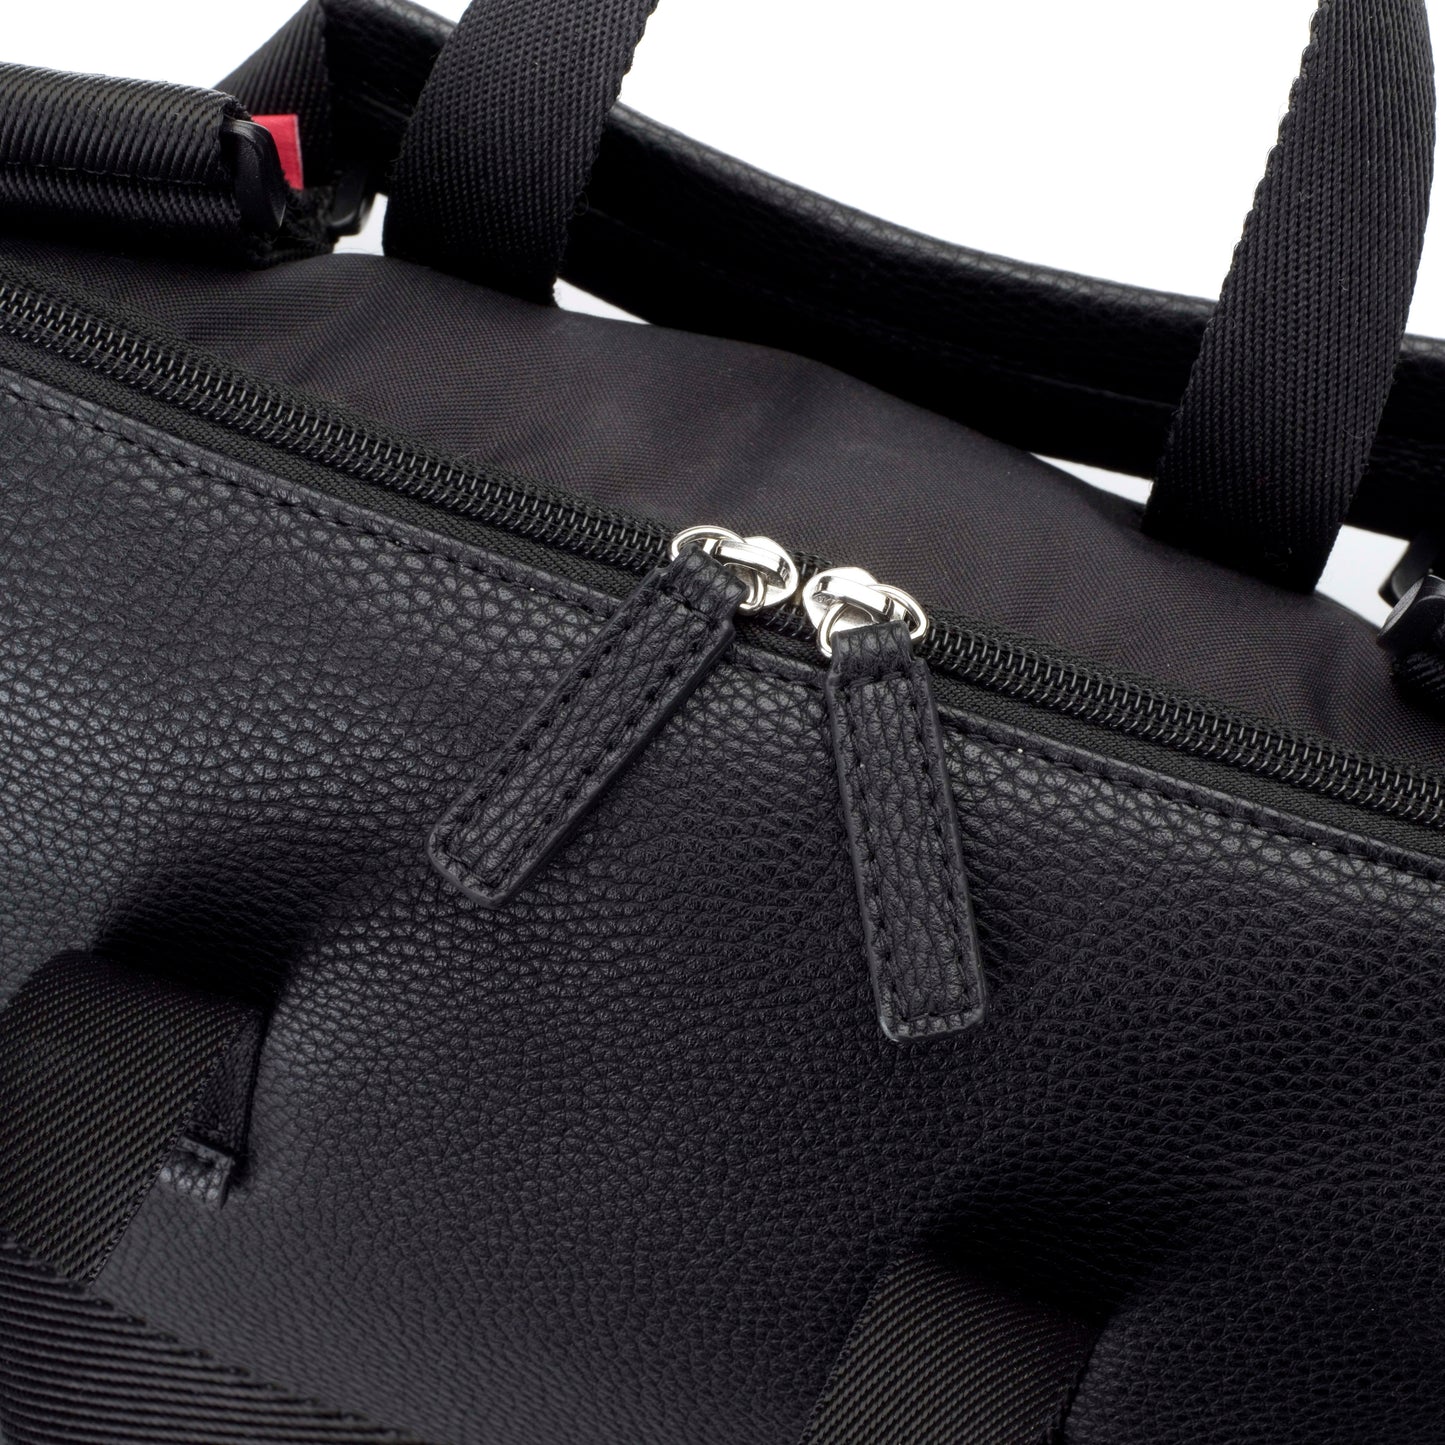 Robyn Convertible Diaper Bag Vegan Leather  - Black